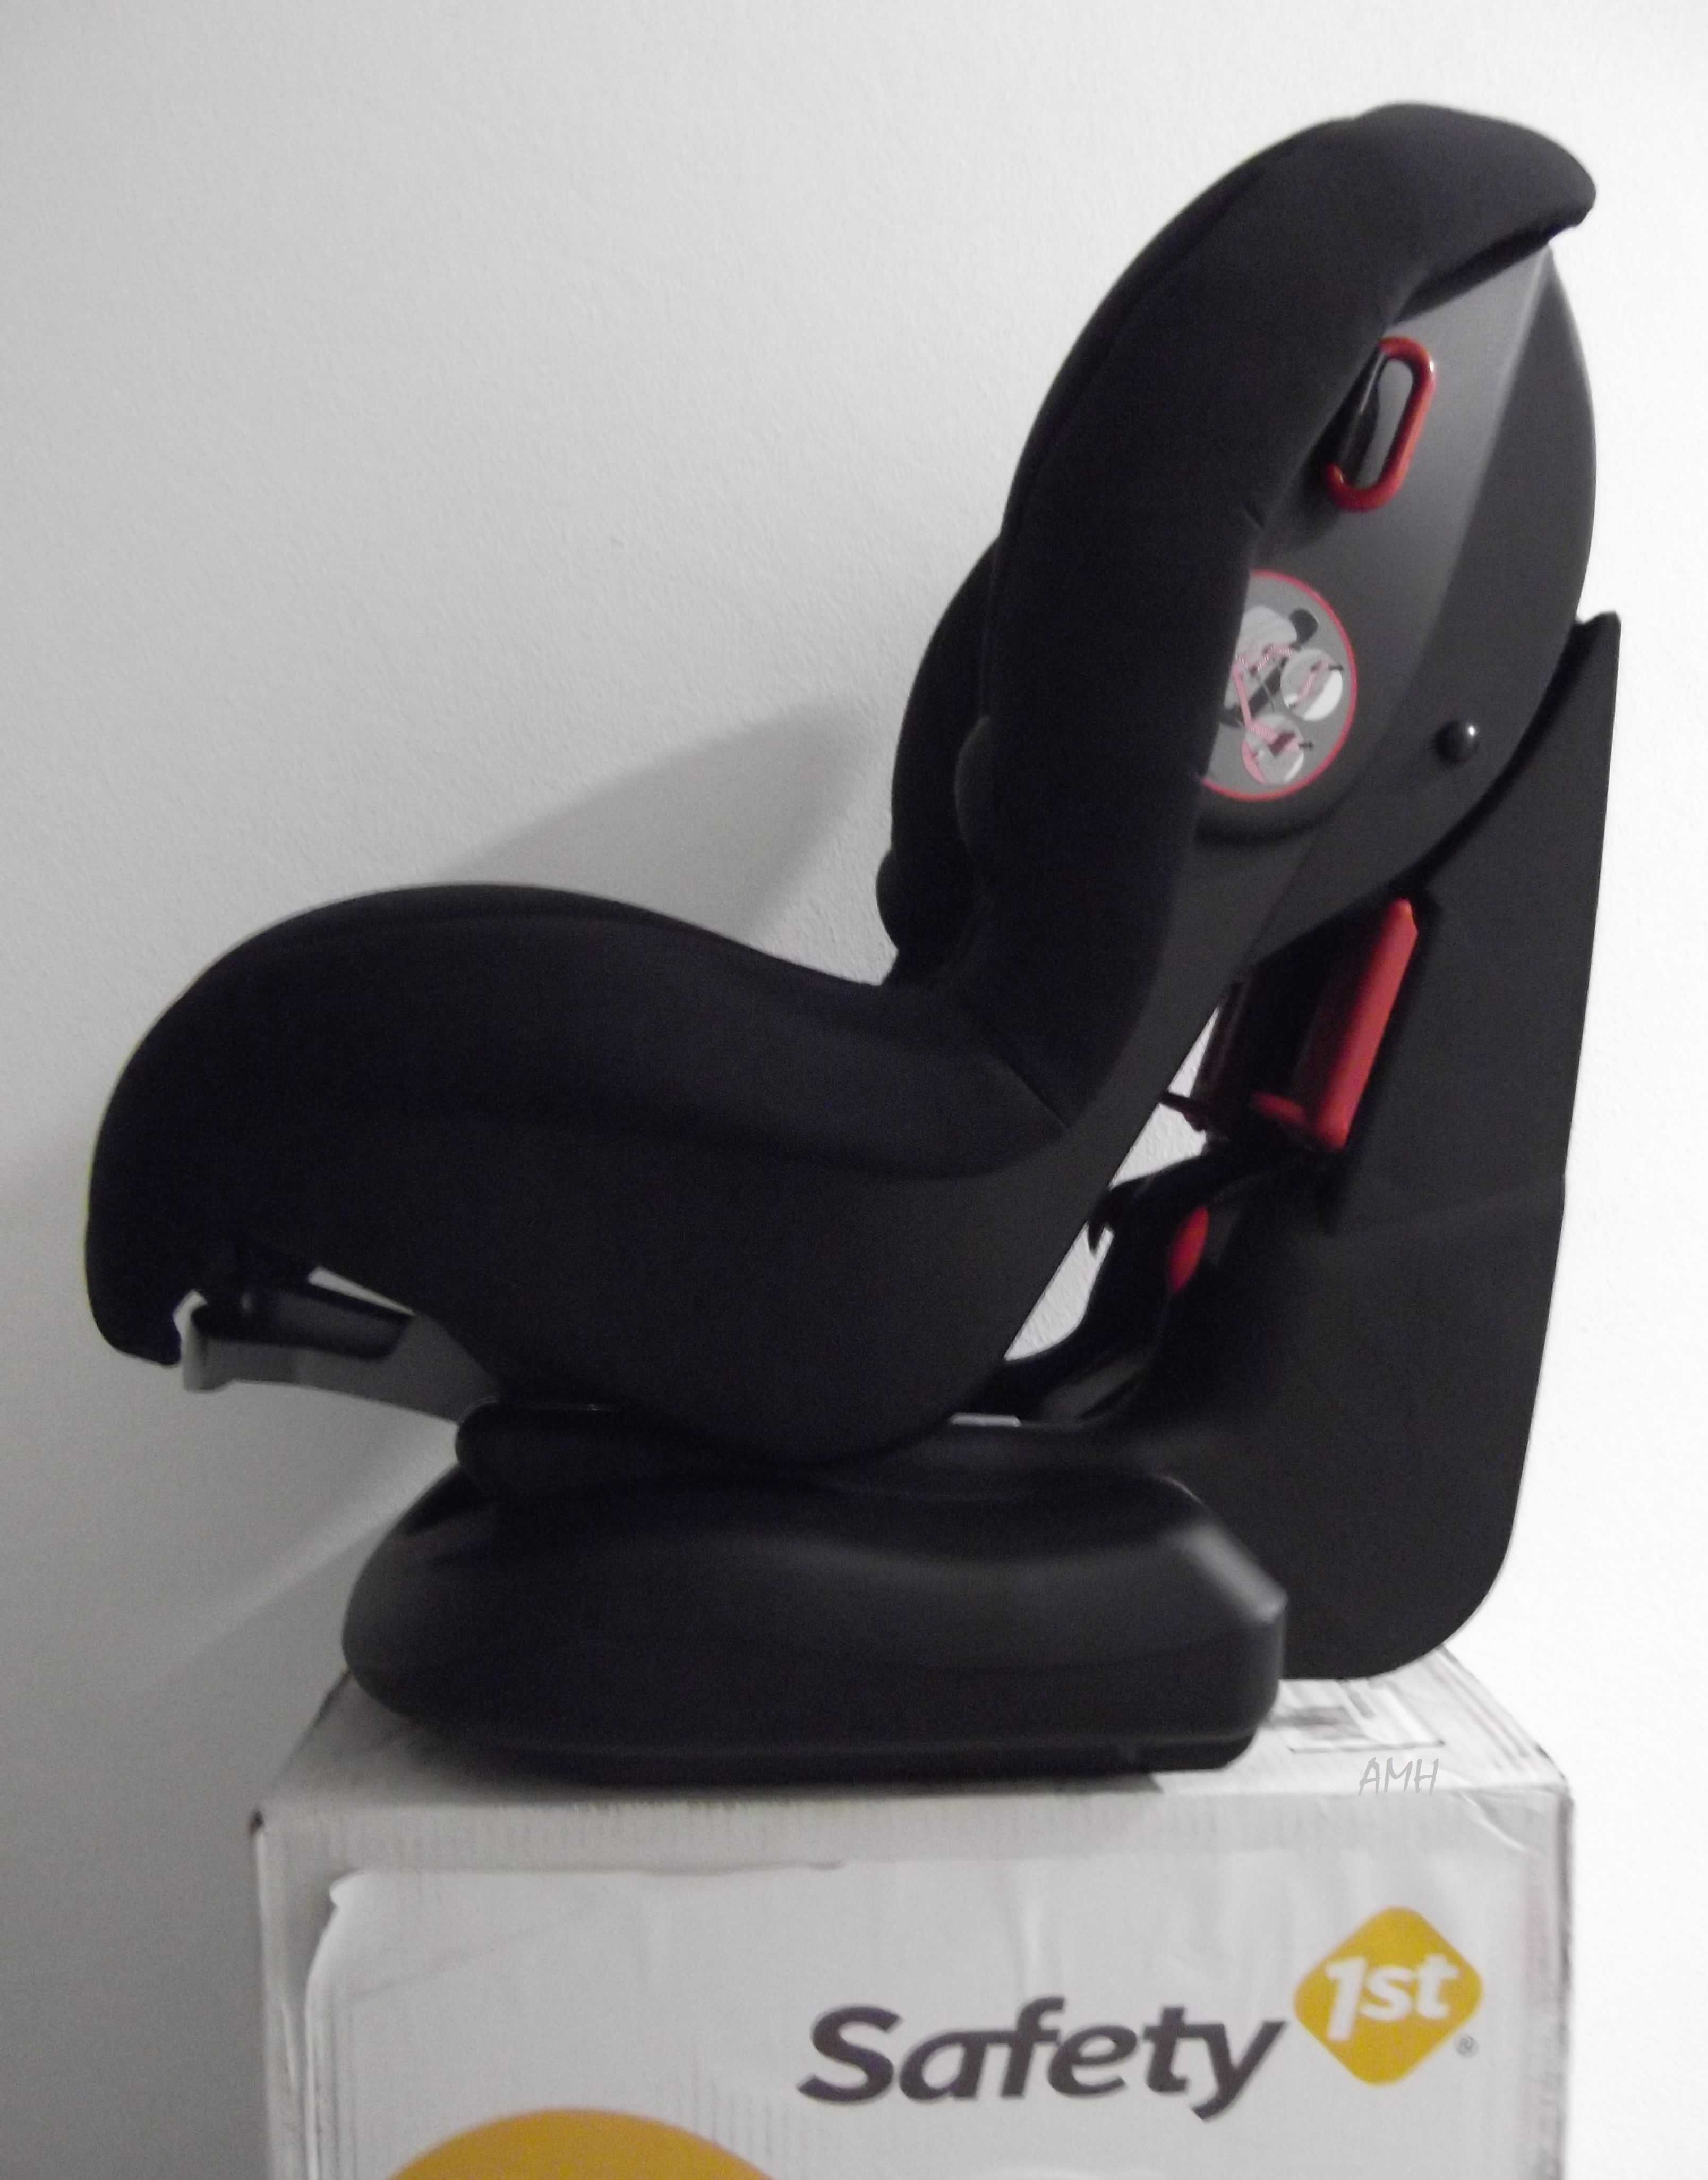 Safety 1st Baby Cool cadeira auto grupo 1